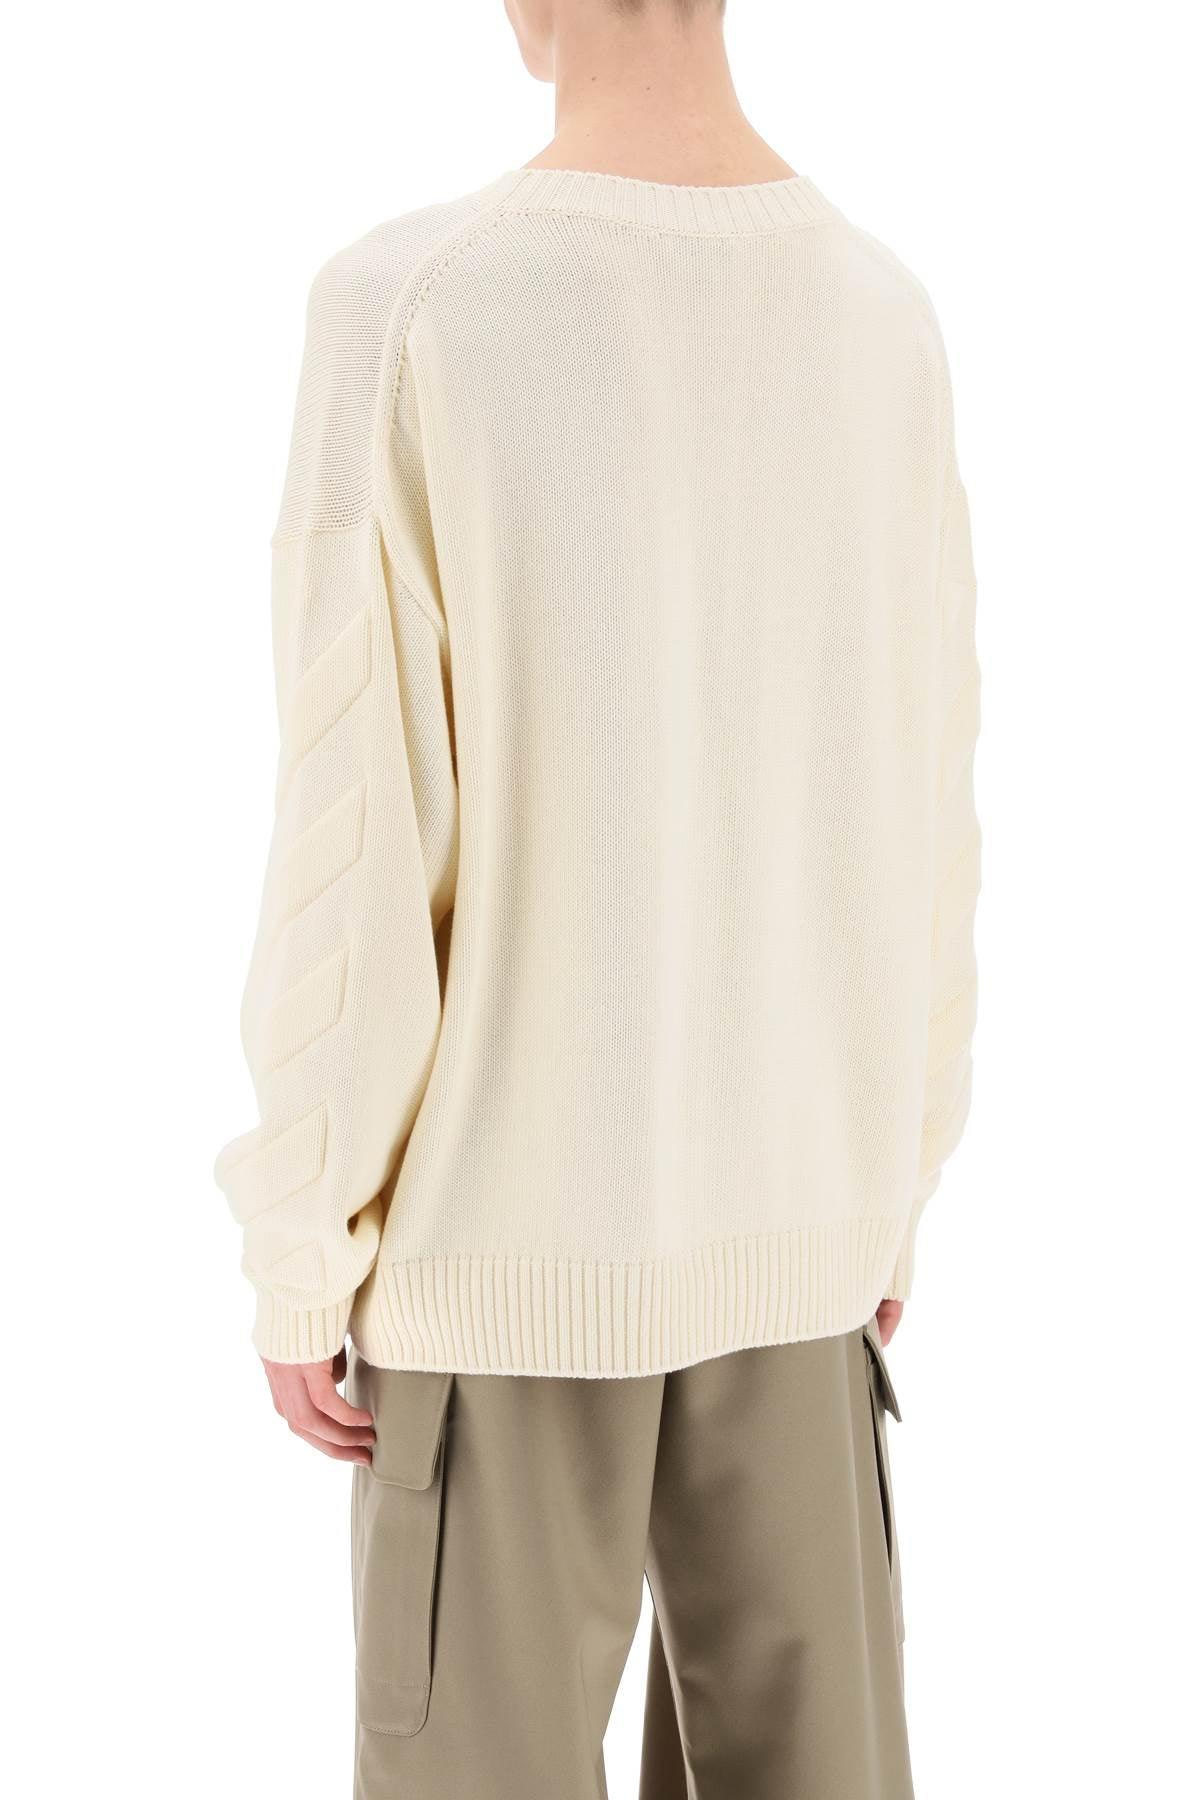 Off White Sweater With Embossed Diagonal Motif - JOHN JULIA